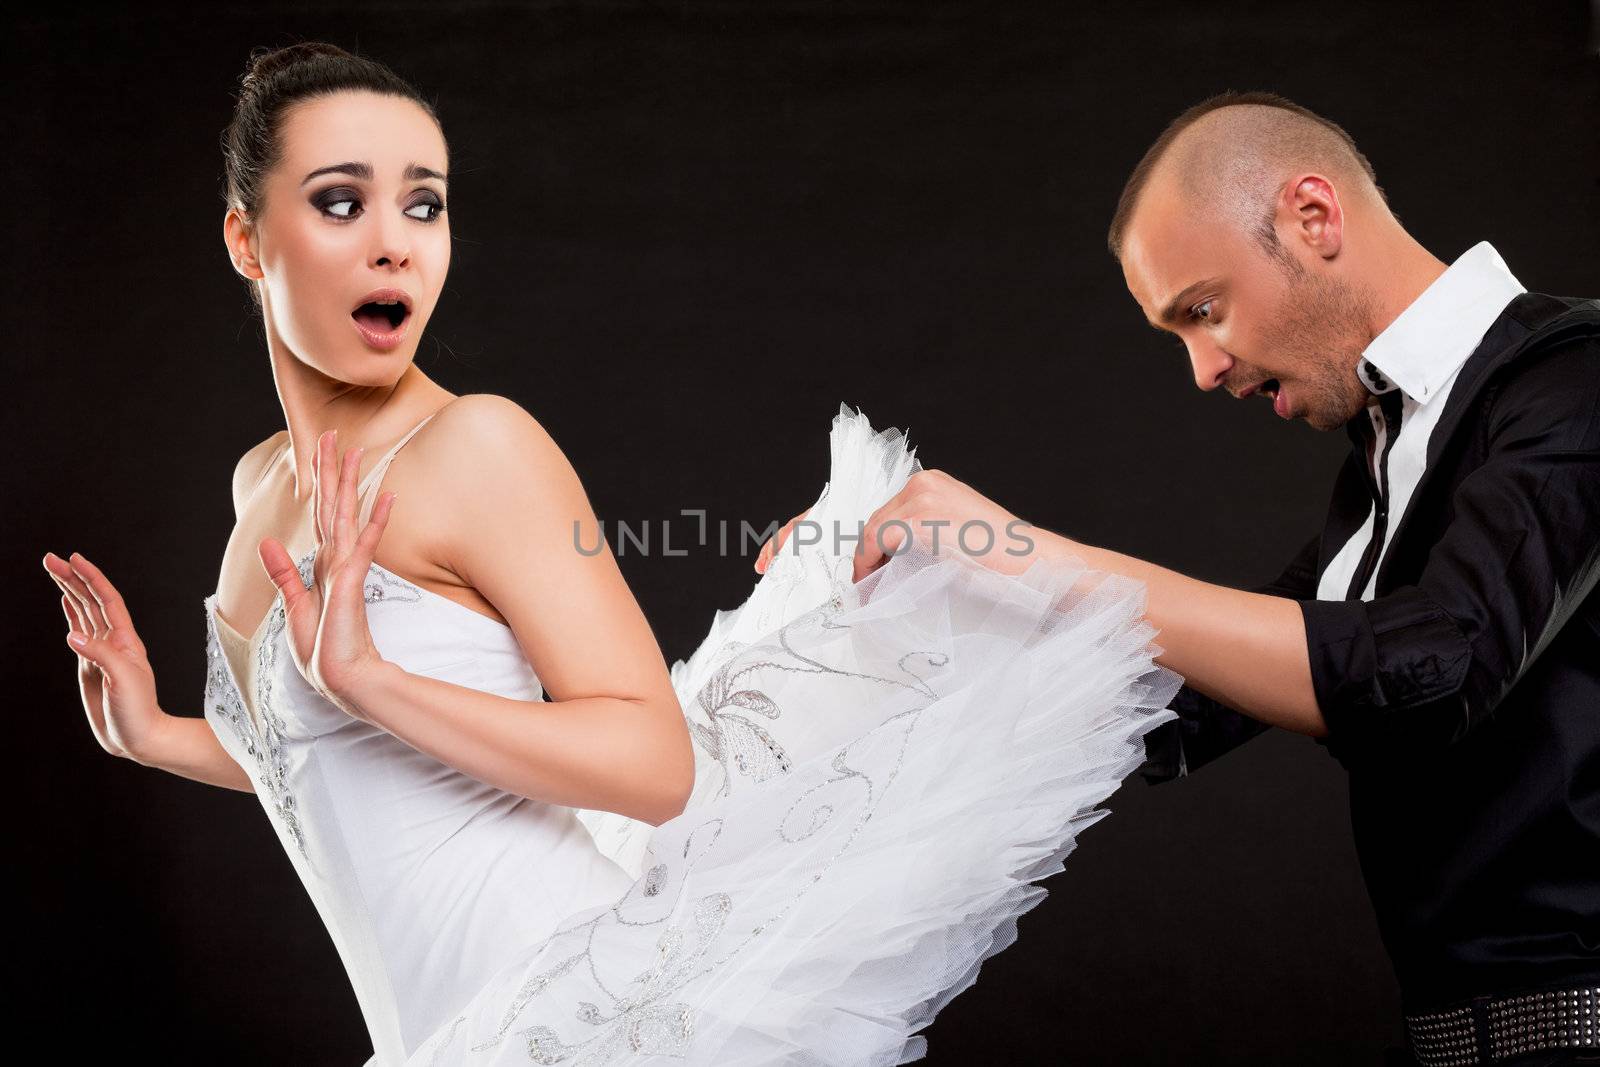 Man looking under beautiful ballerina pettiskirt, both looking surprised